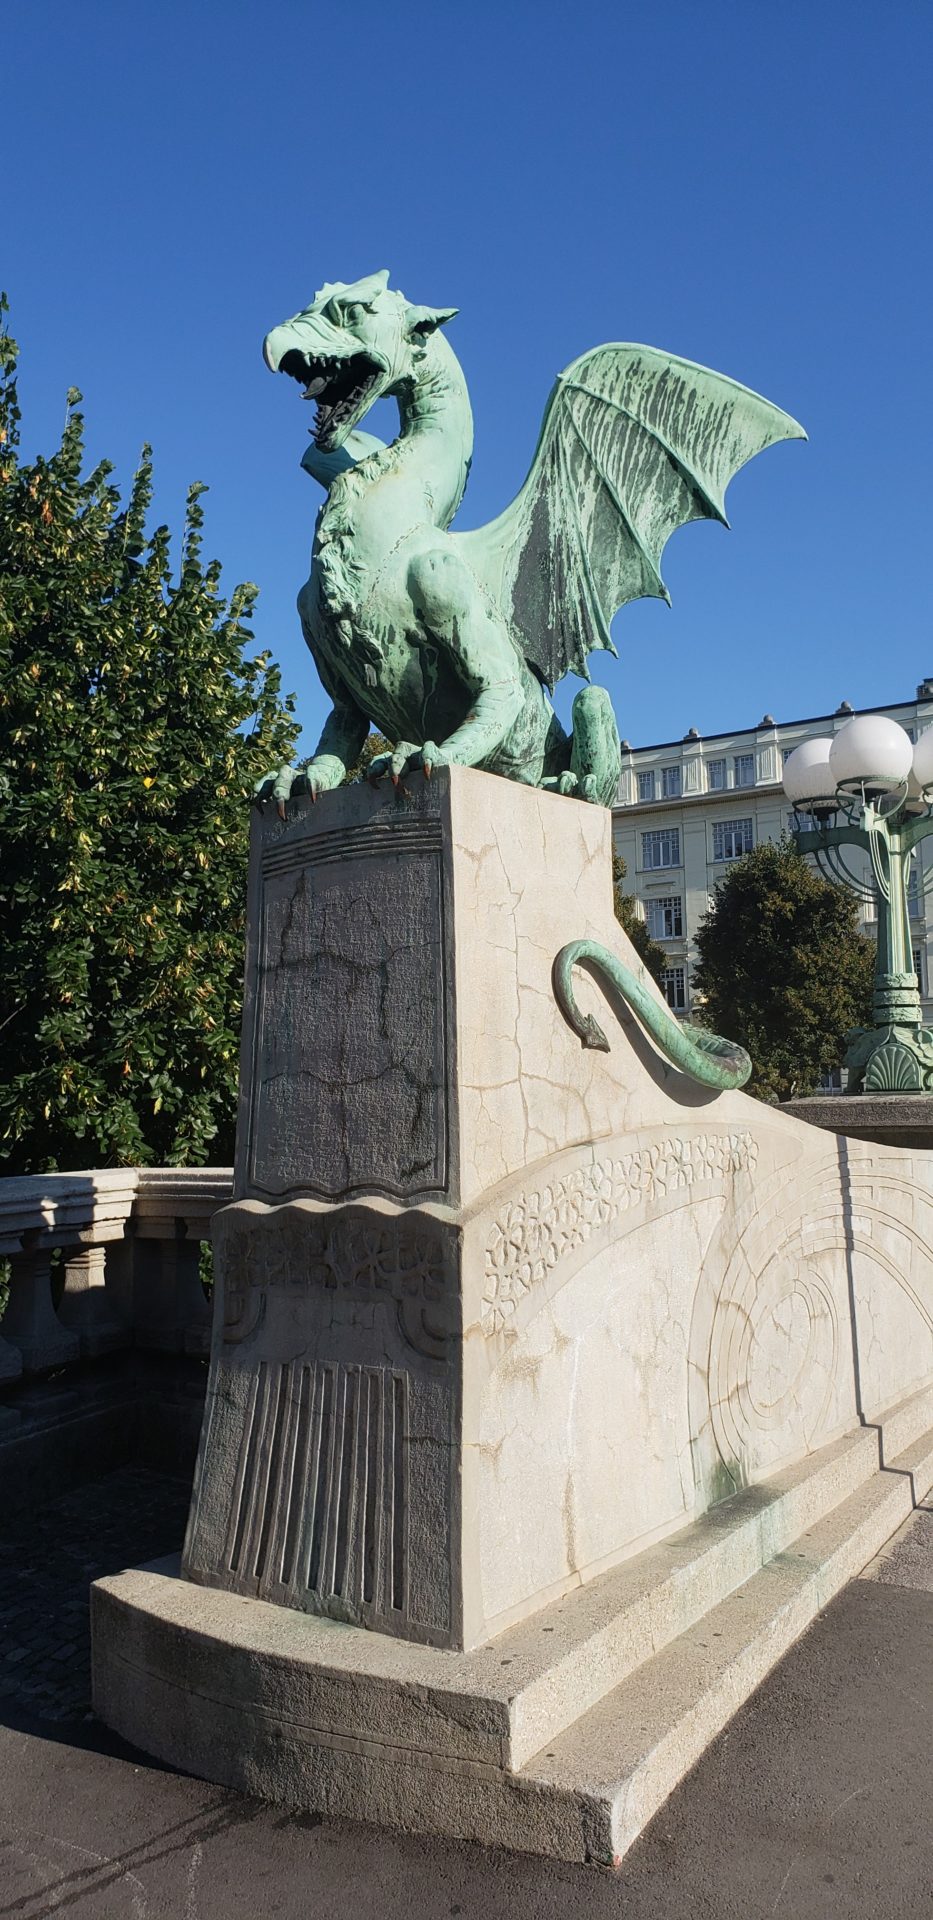 a statue of a dragon on a stone platform